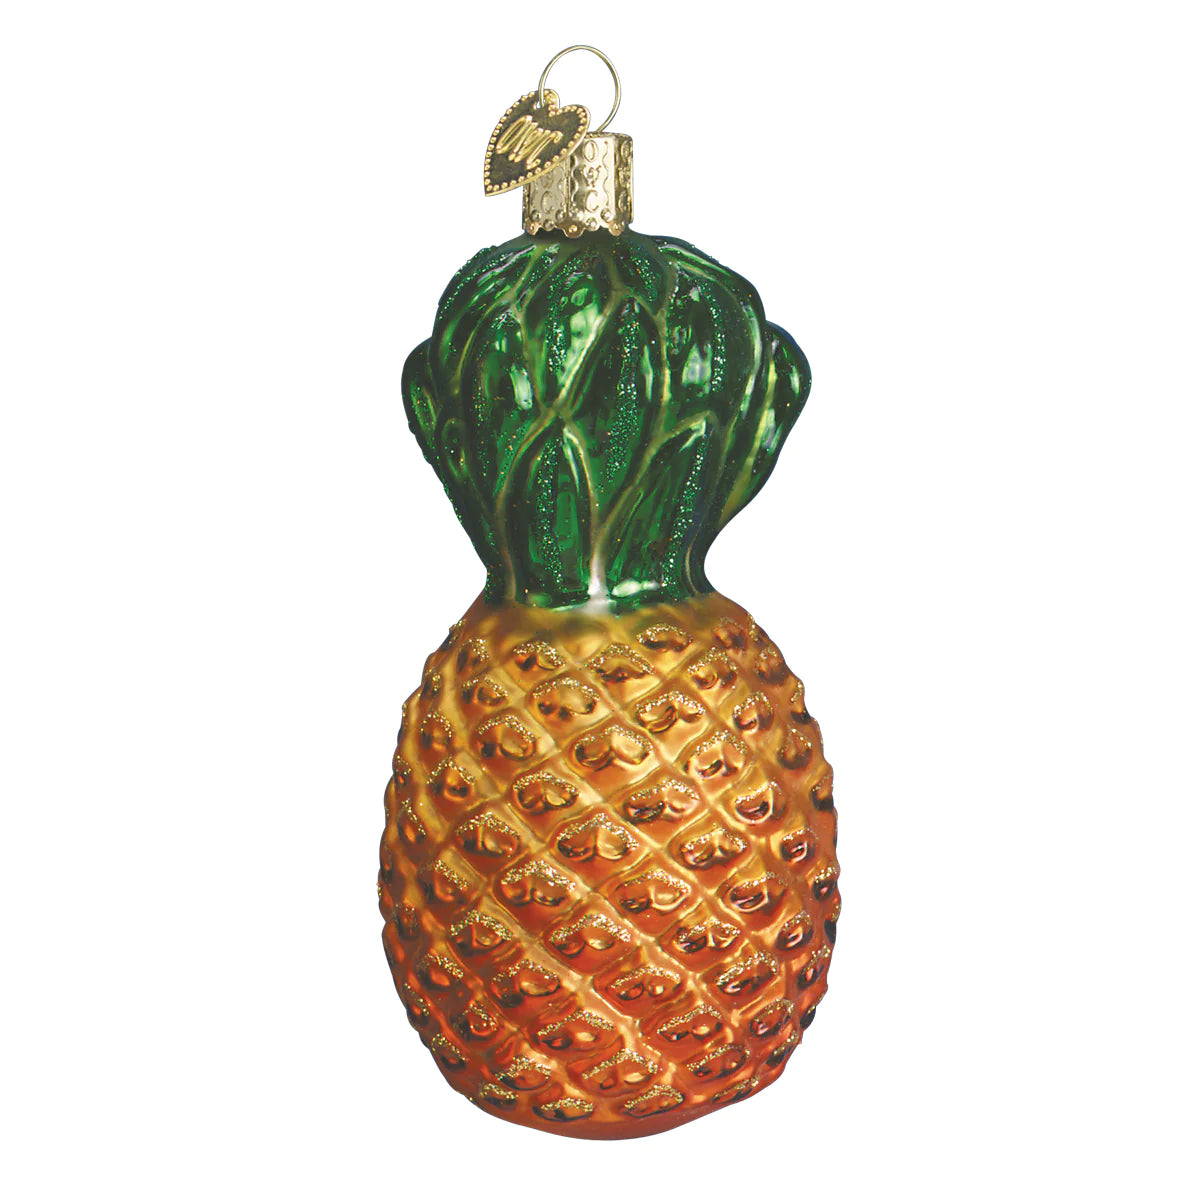 Pineapple Ornament  Old World Christmas   